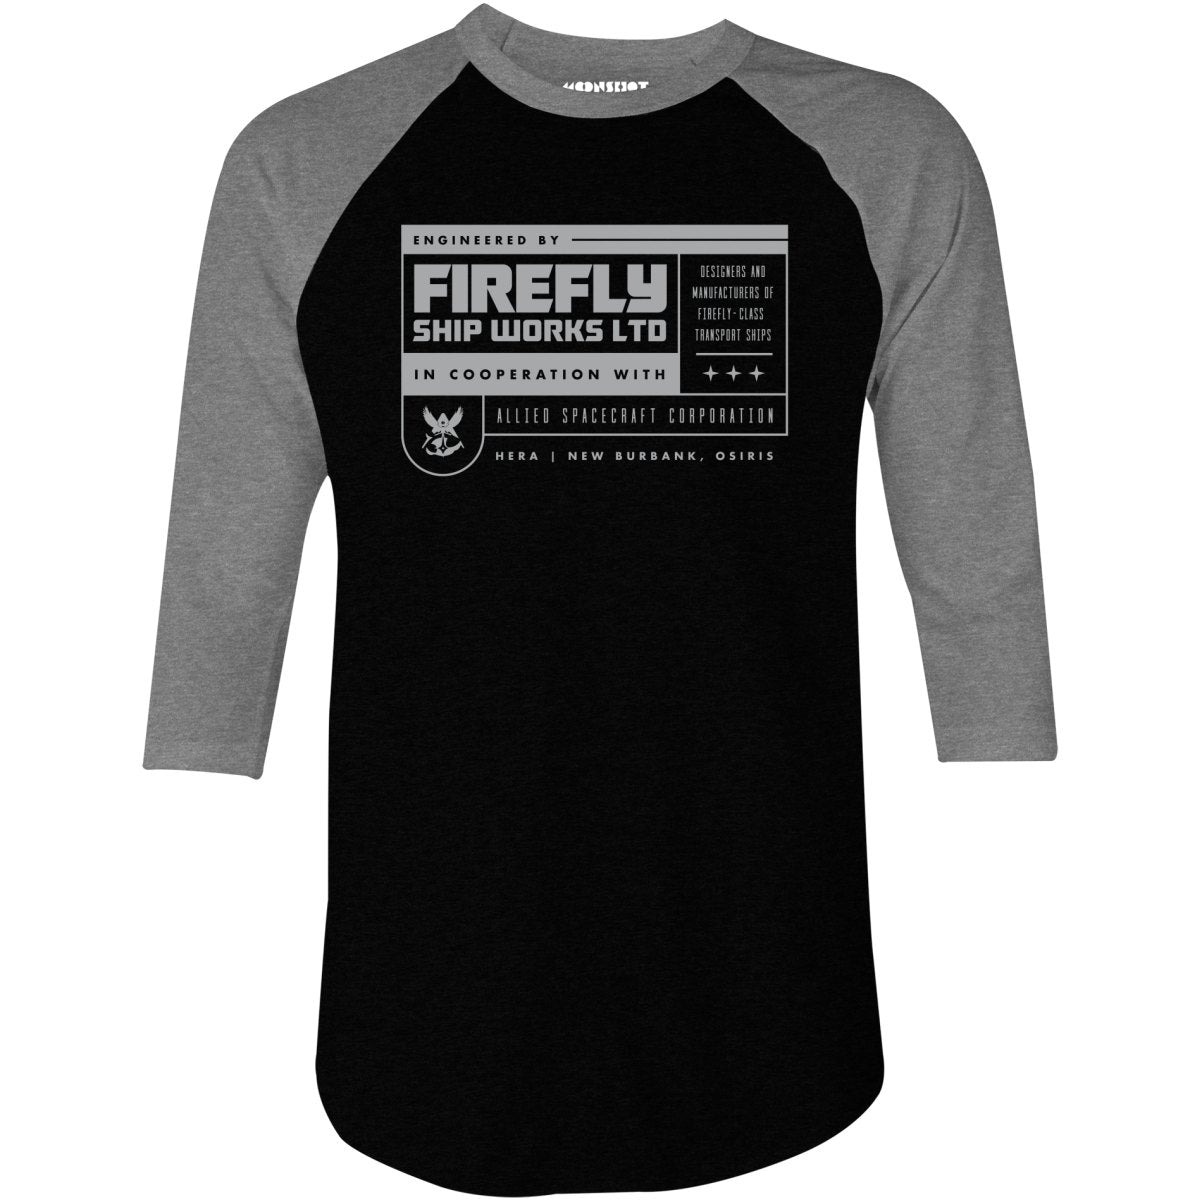 Firefly Ship Works Ltd. - 3/4 Sleeve Raglan T-Shirt